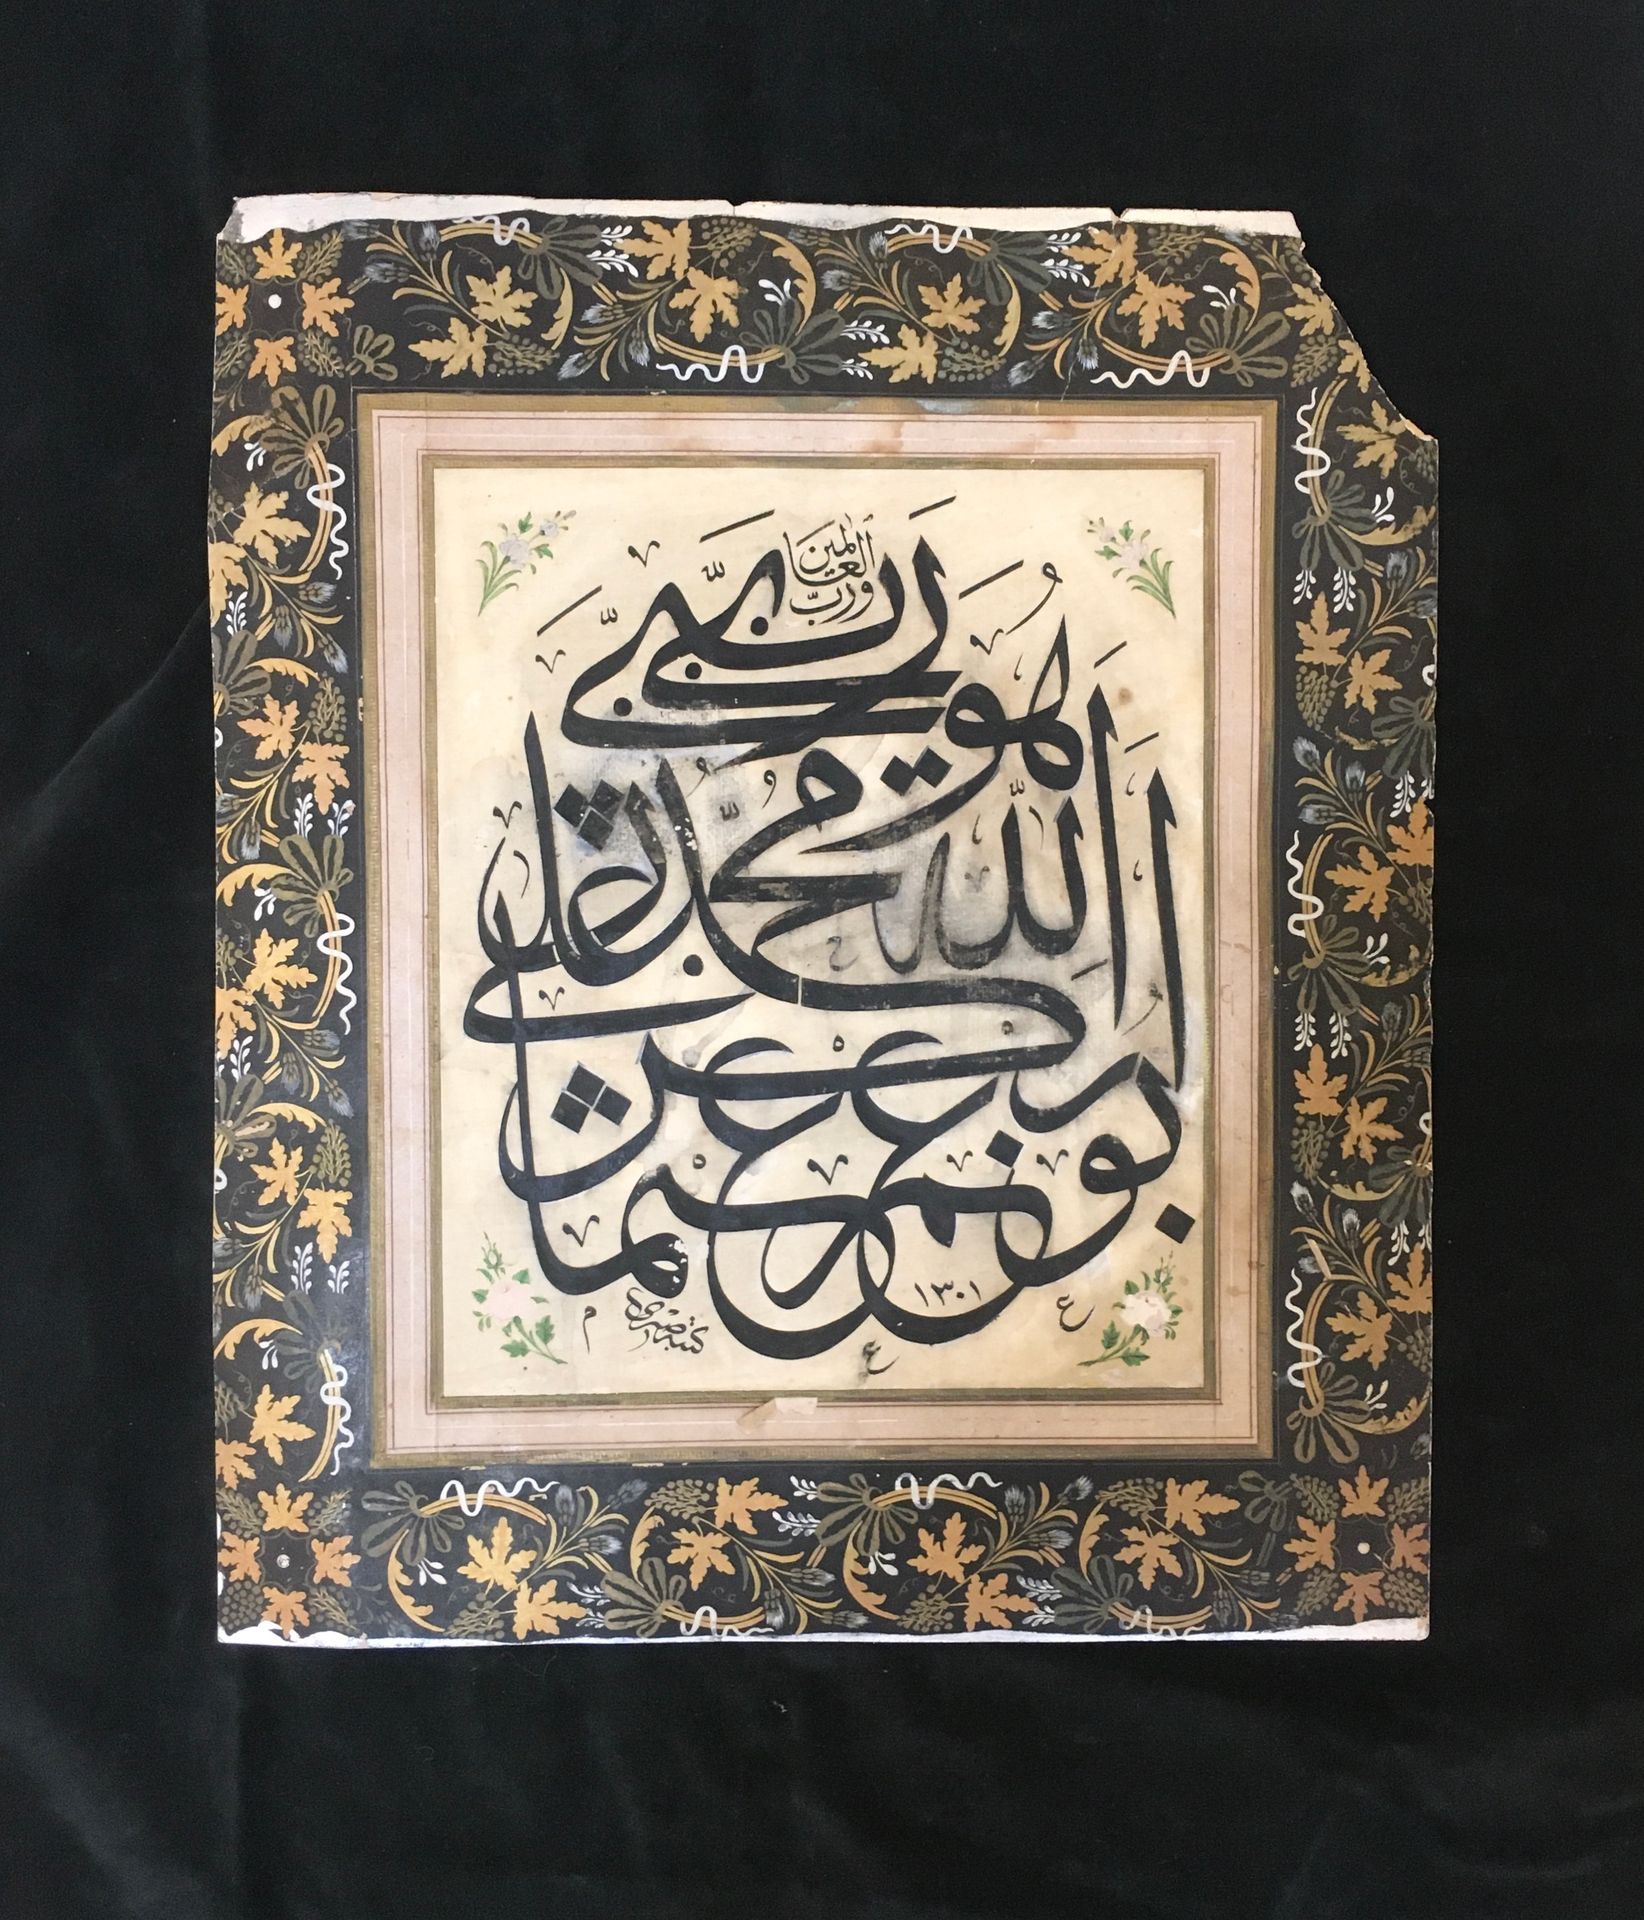 Calligraphie signée Sabri et datée 1301H. '''= 1883 mit dem Titel "Al-'alamein w&hellip;